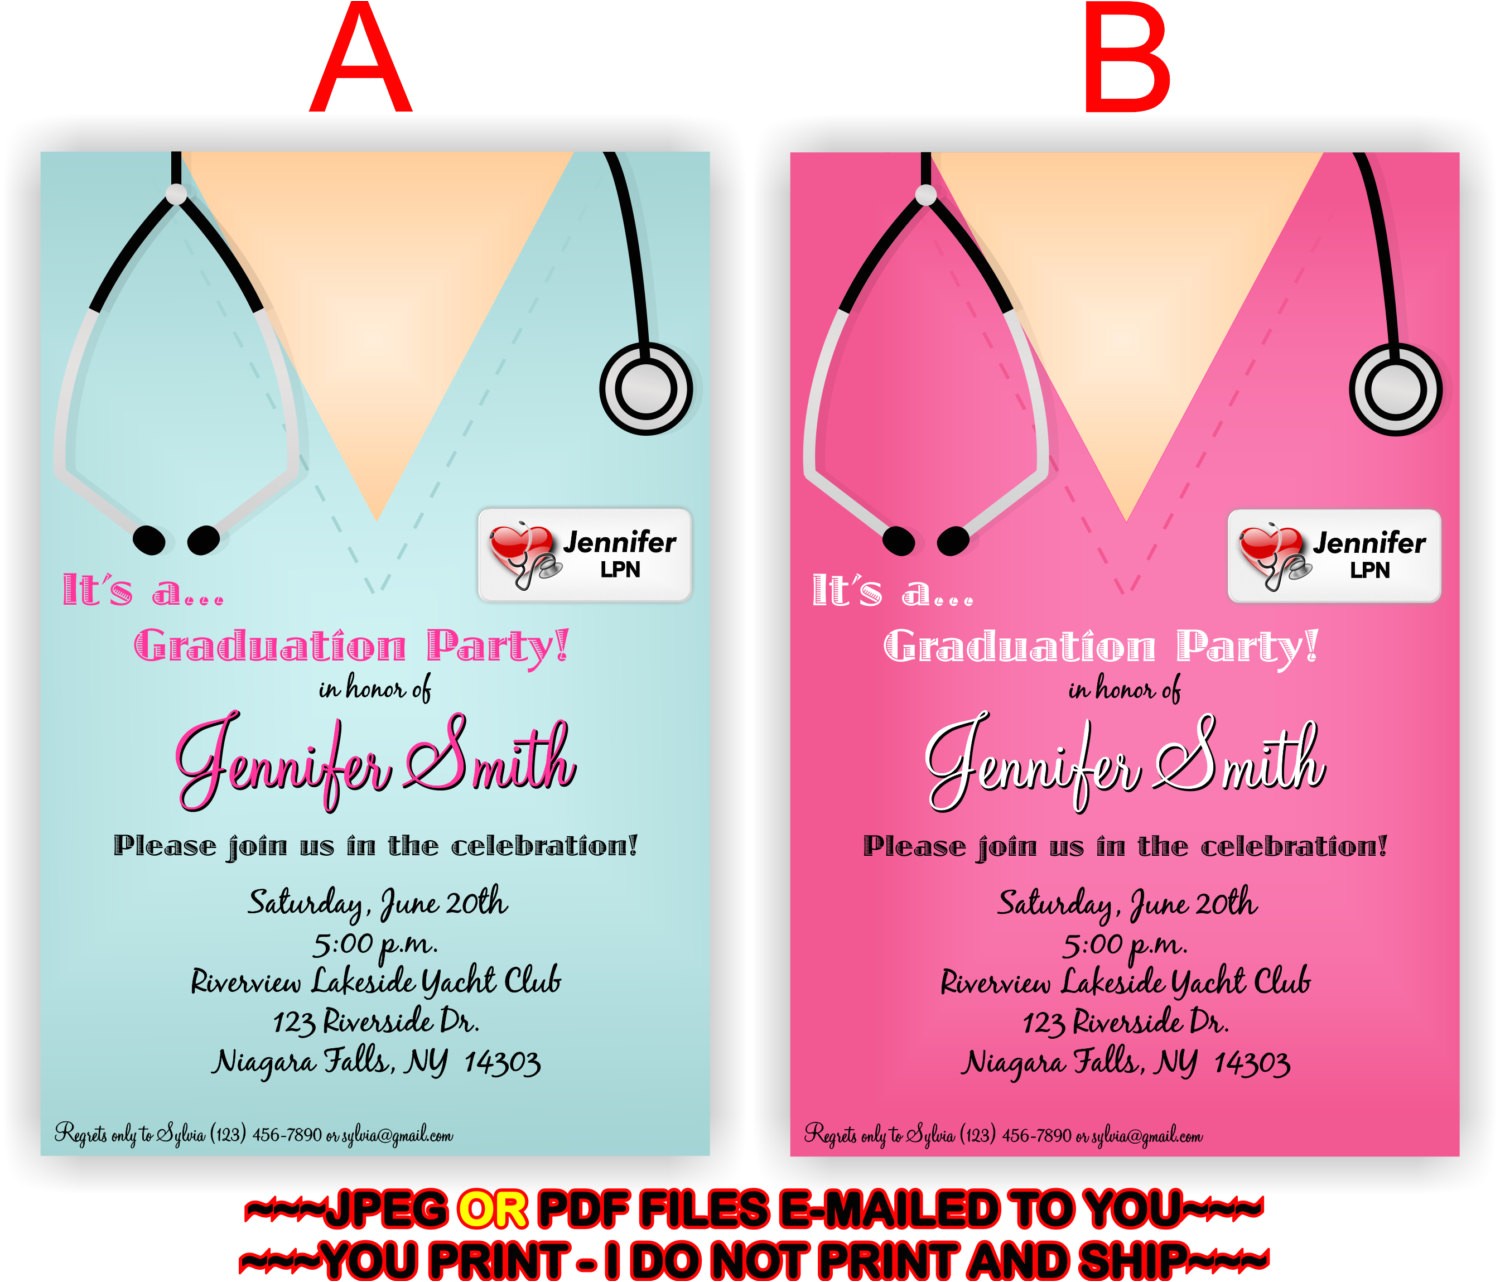 alluring nursing school graduation invitations hd images for you